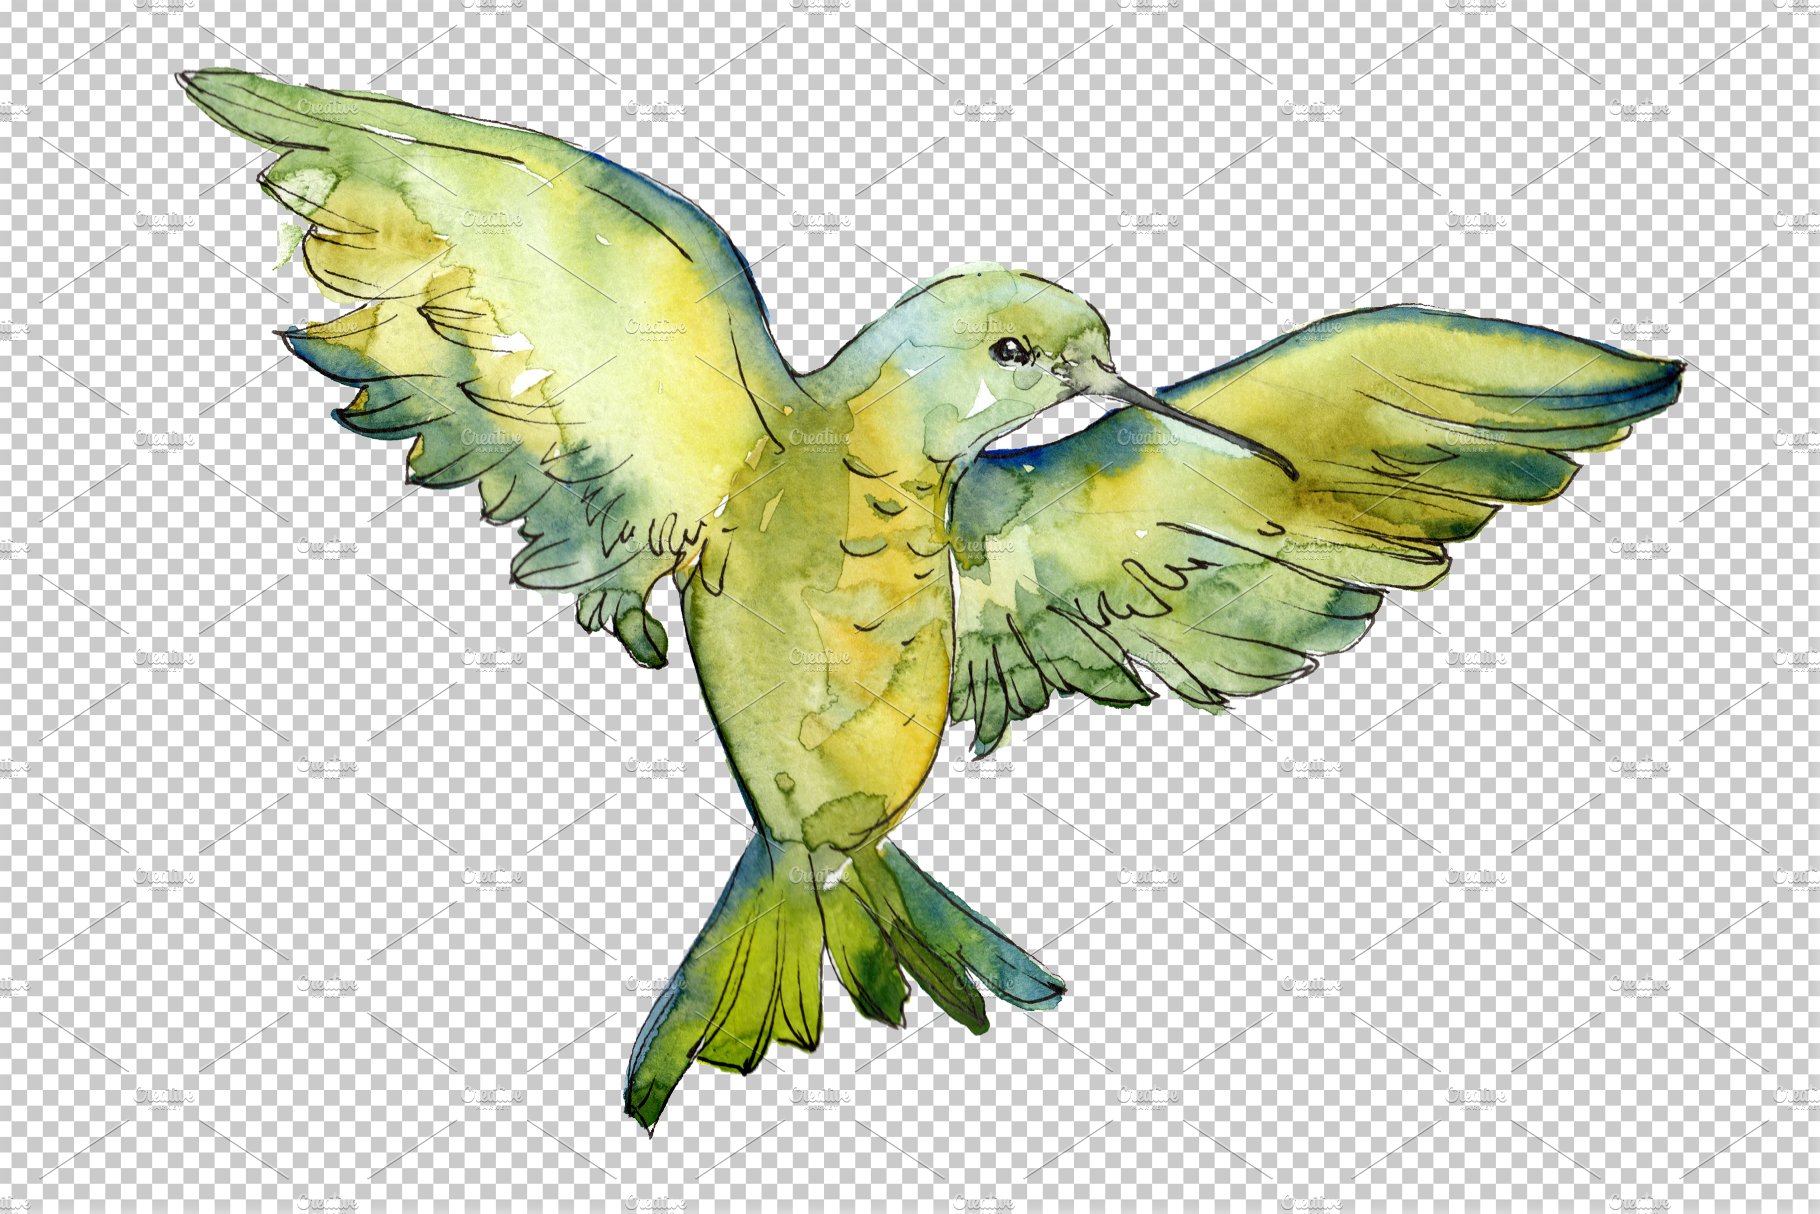 Colibri Small bird Watercolor png preview image.